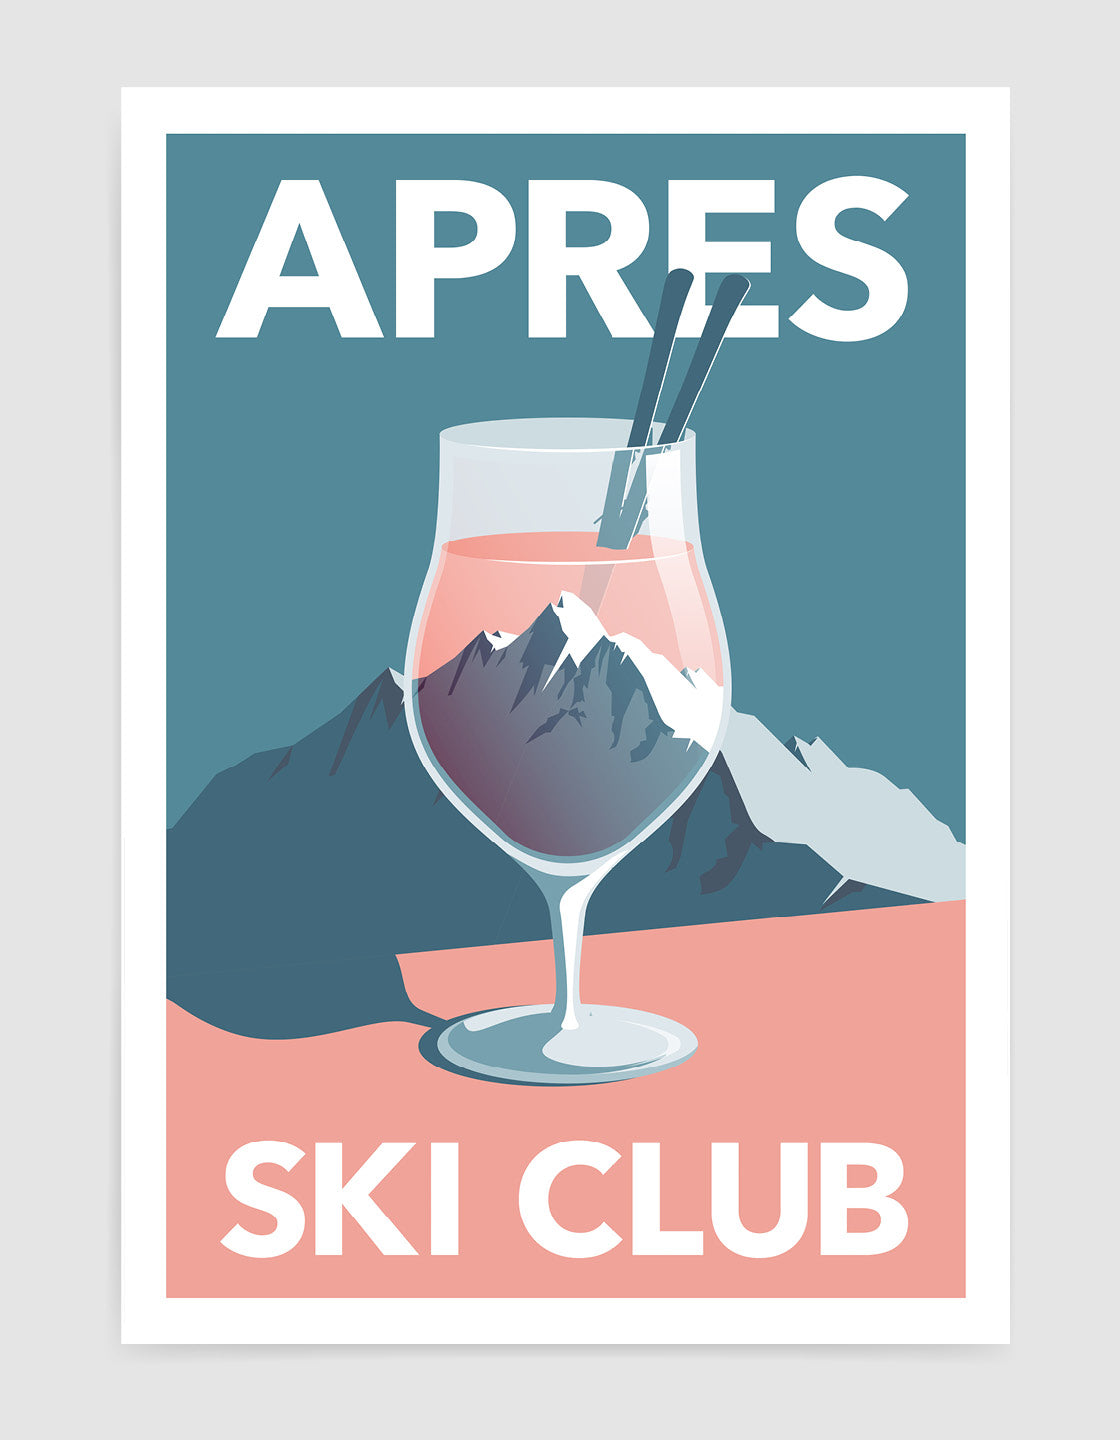 Apres ski